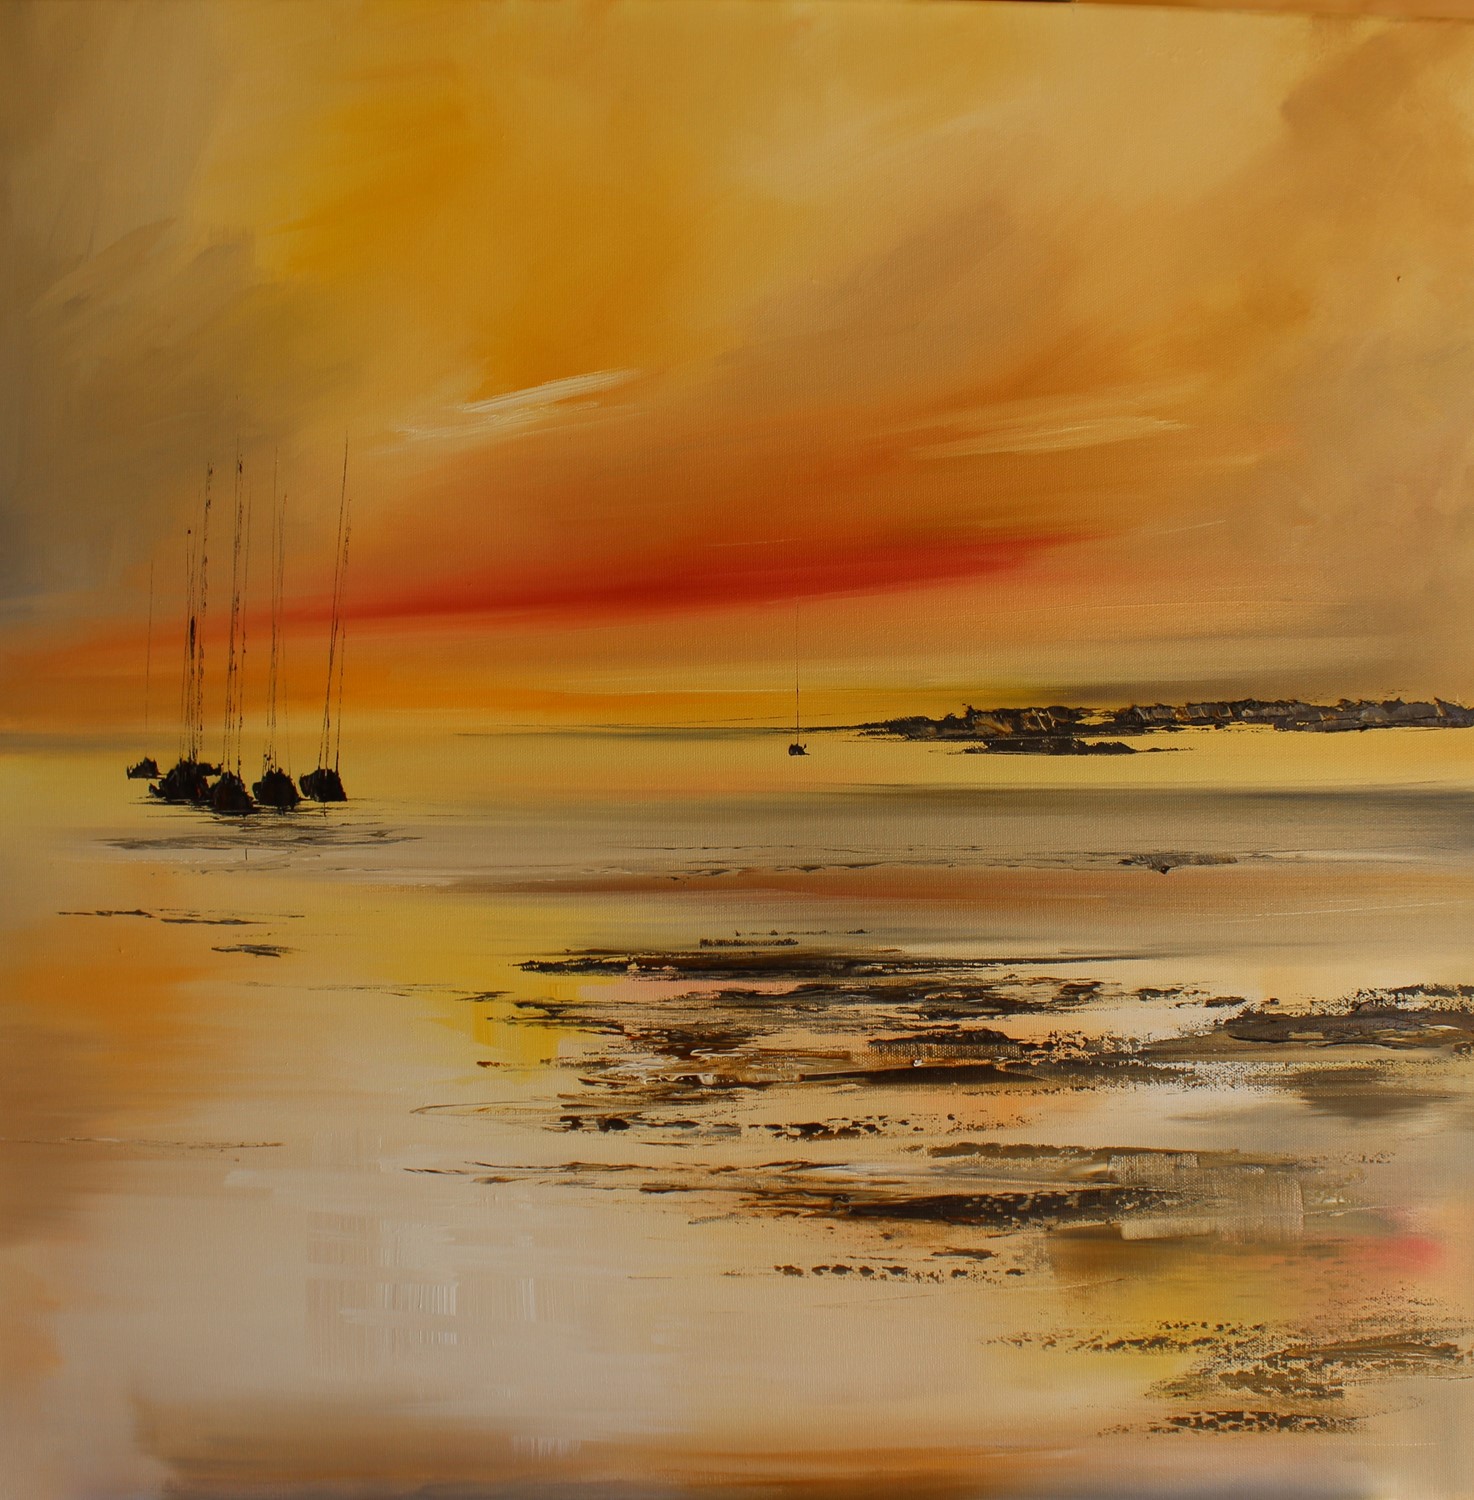 'As the Sunset Lights the Sky' by artist Rosanne Barr